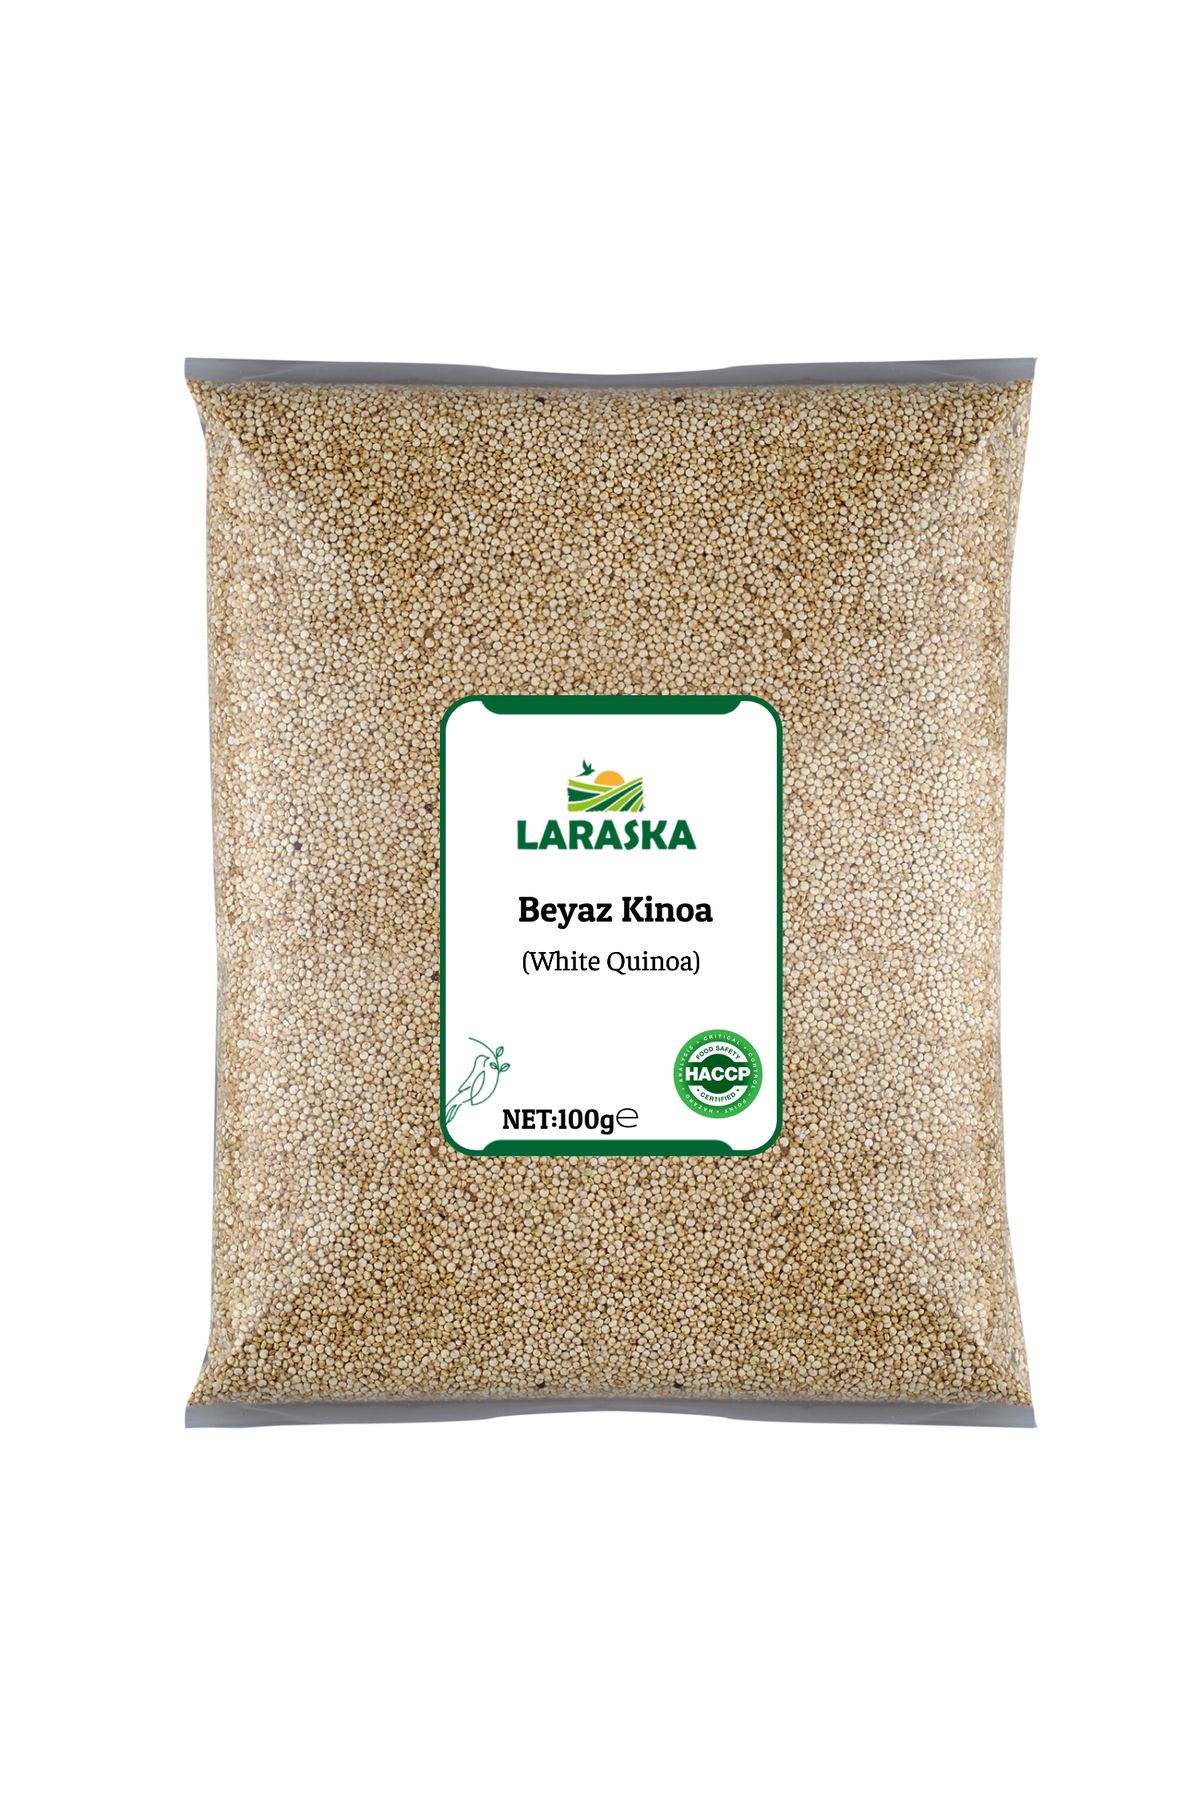 Laraska Beyaz Kinoa 100g - Natural White Quinoa 100g - Katkı Maddesiz Doğal